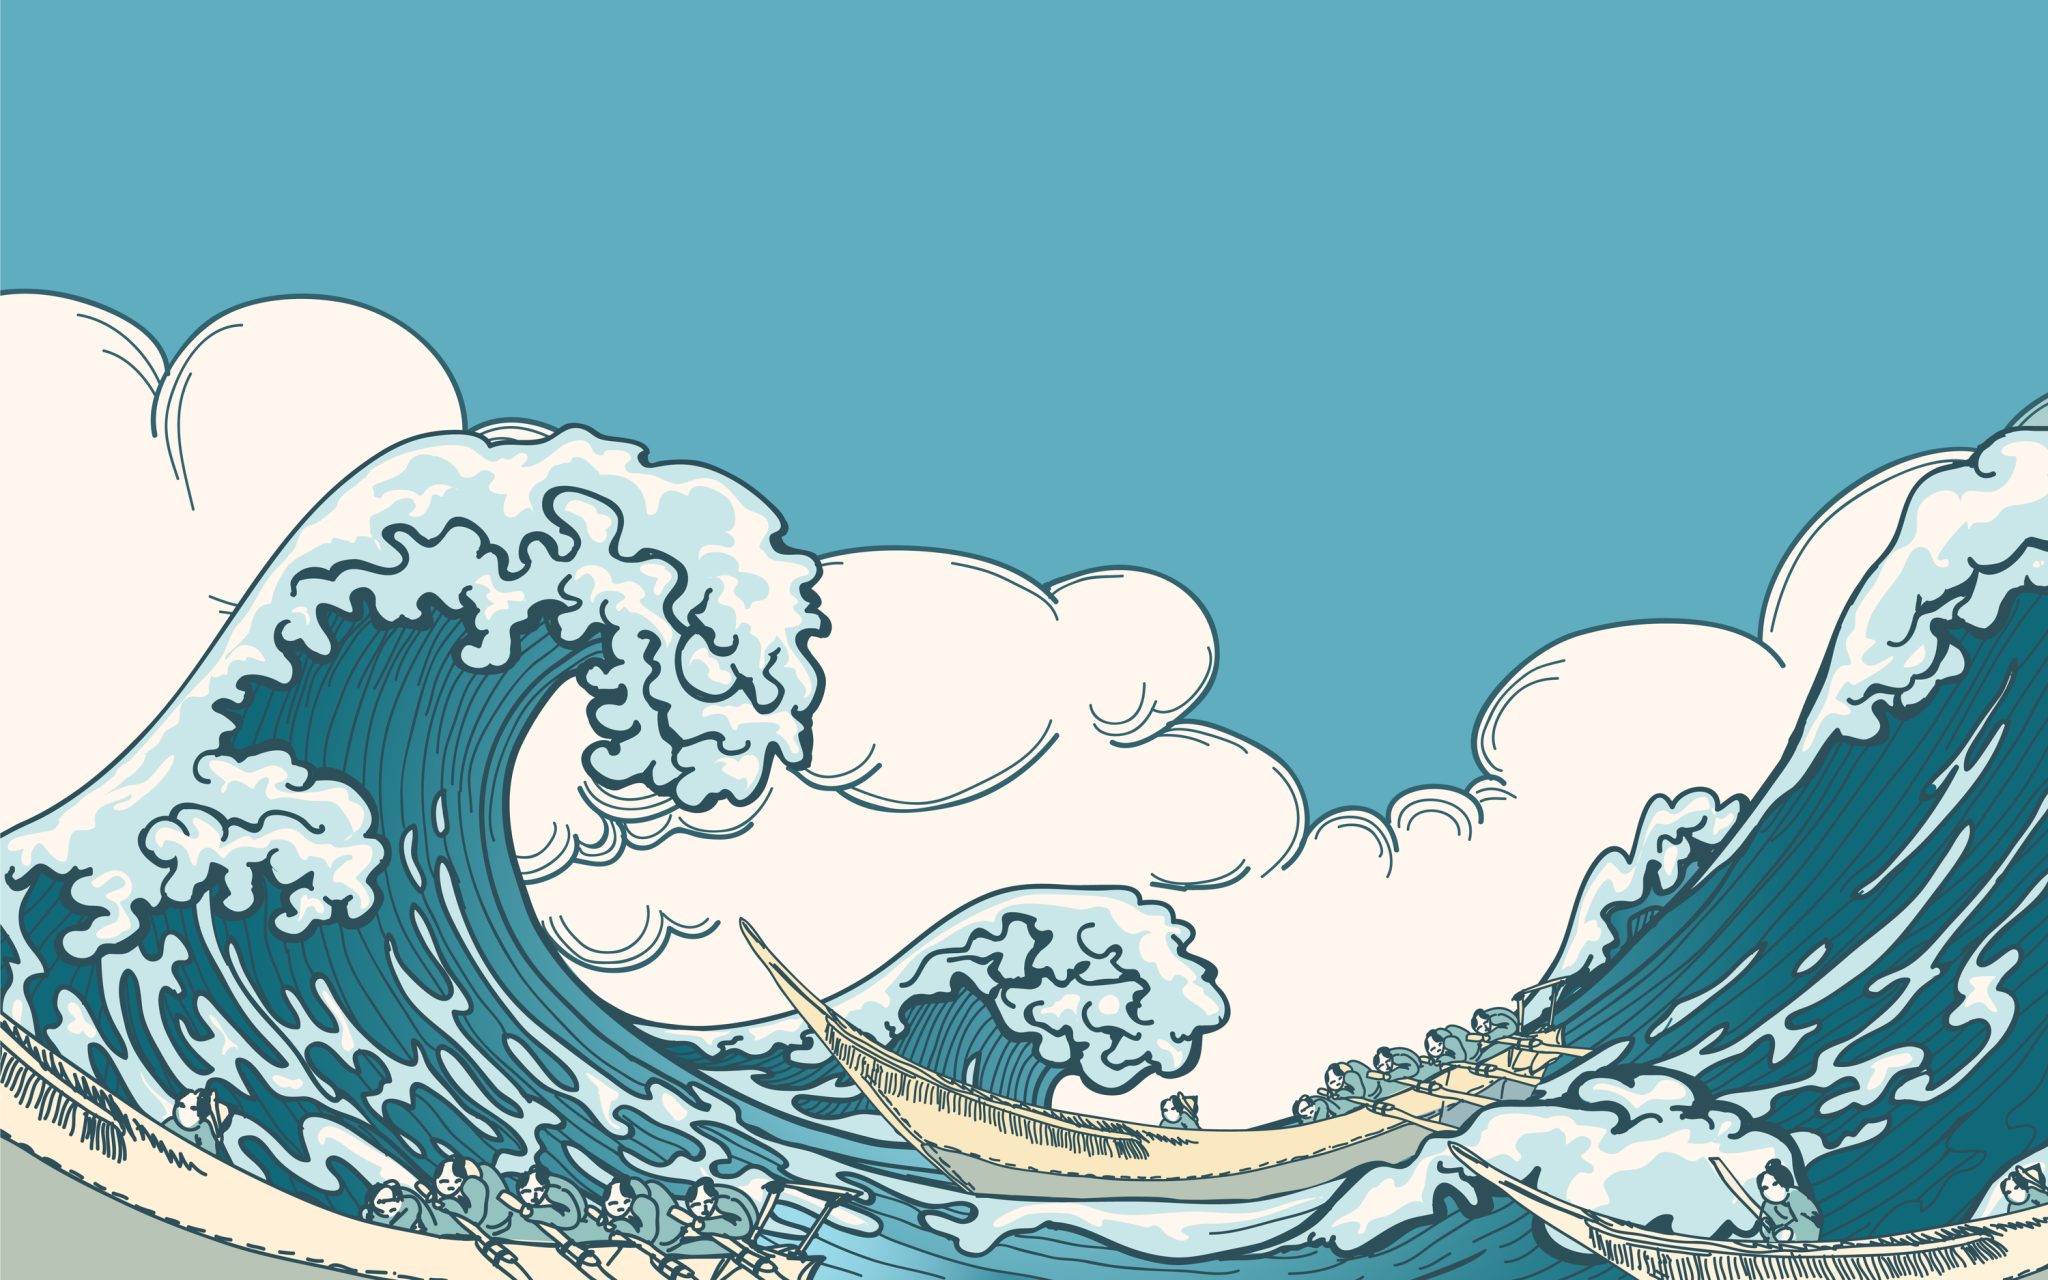 Big wave vector. Sea wave, ocean wave, nature water wave illustration